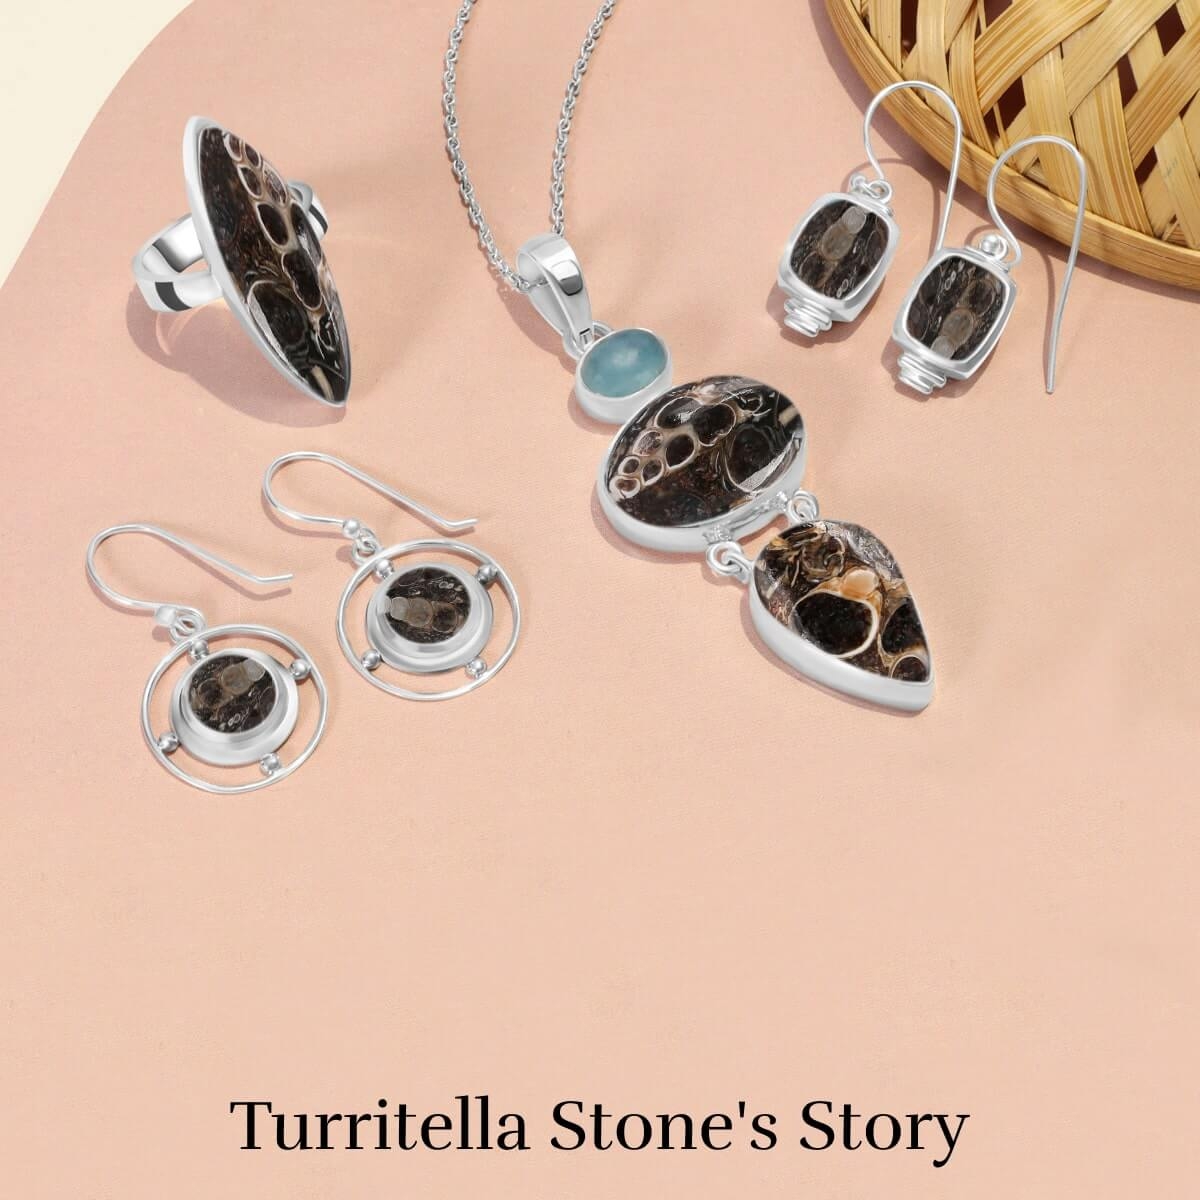 History of Turritella Stone